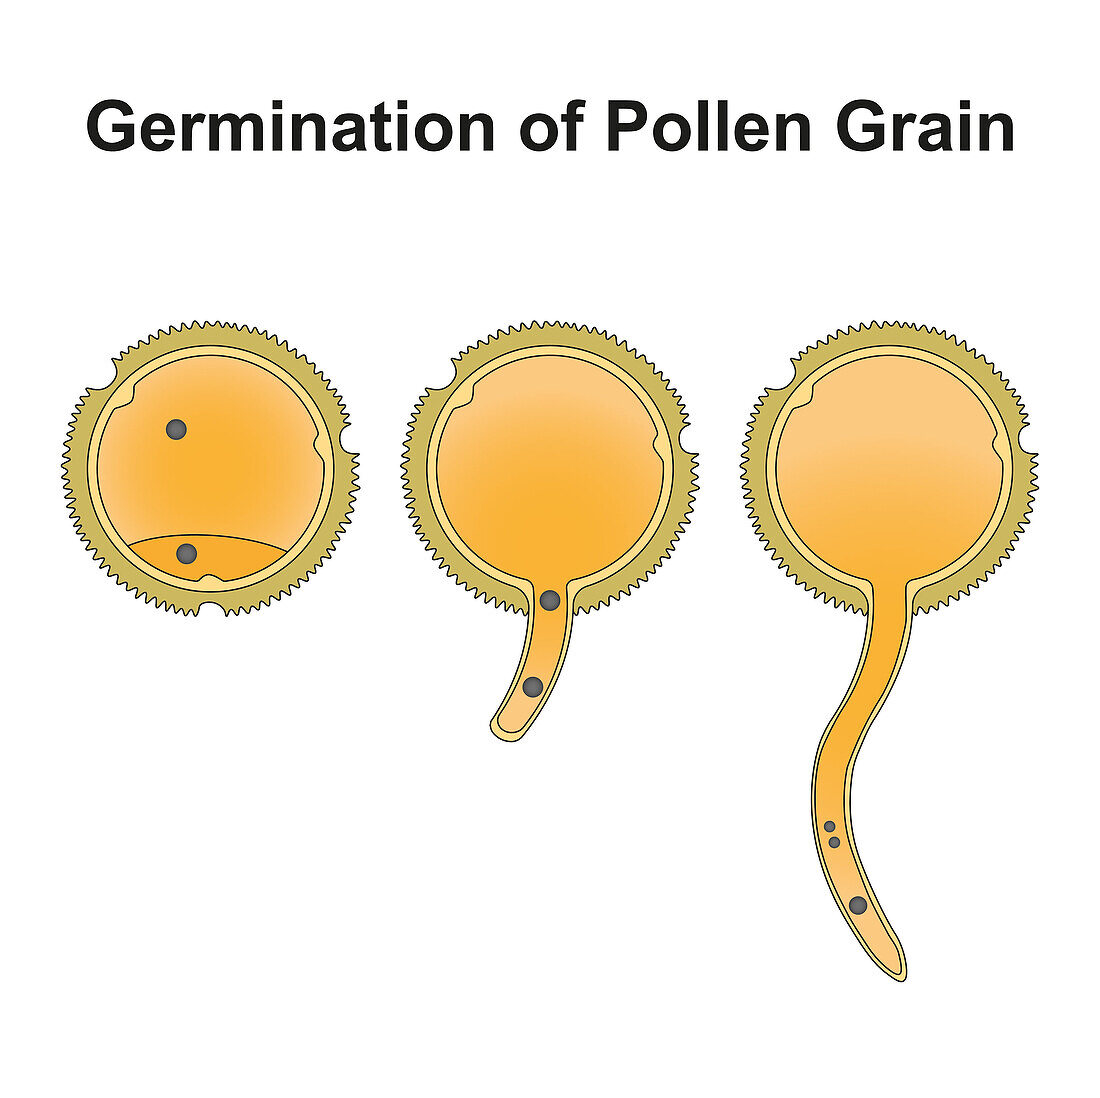 Germination of a pollen grain, illustration